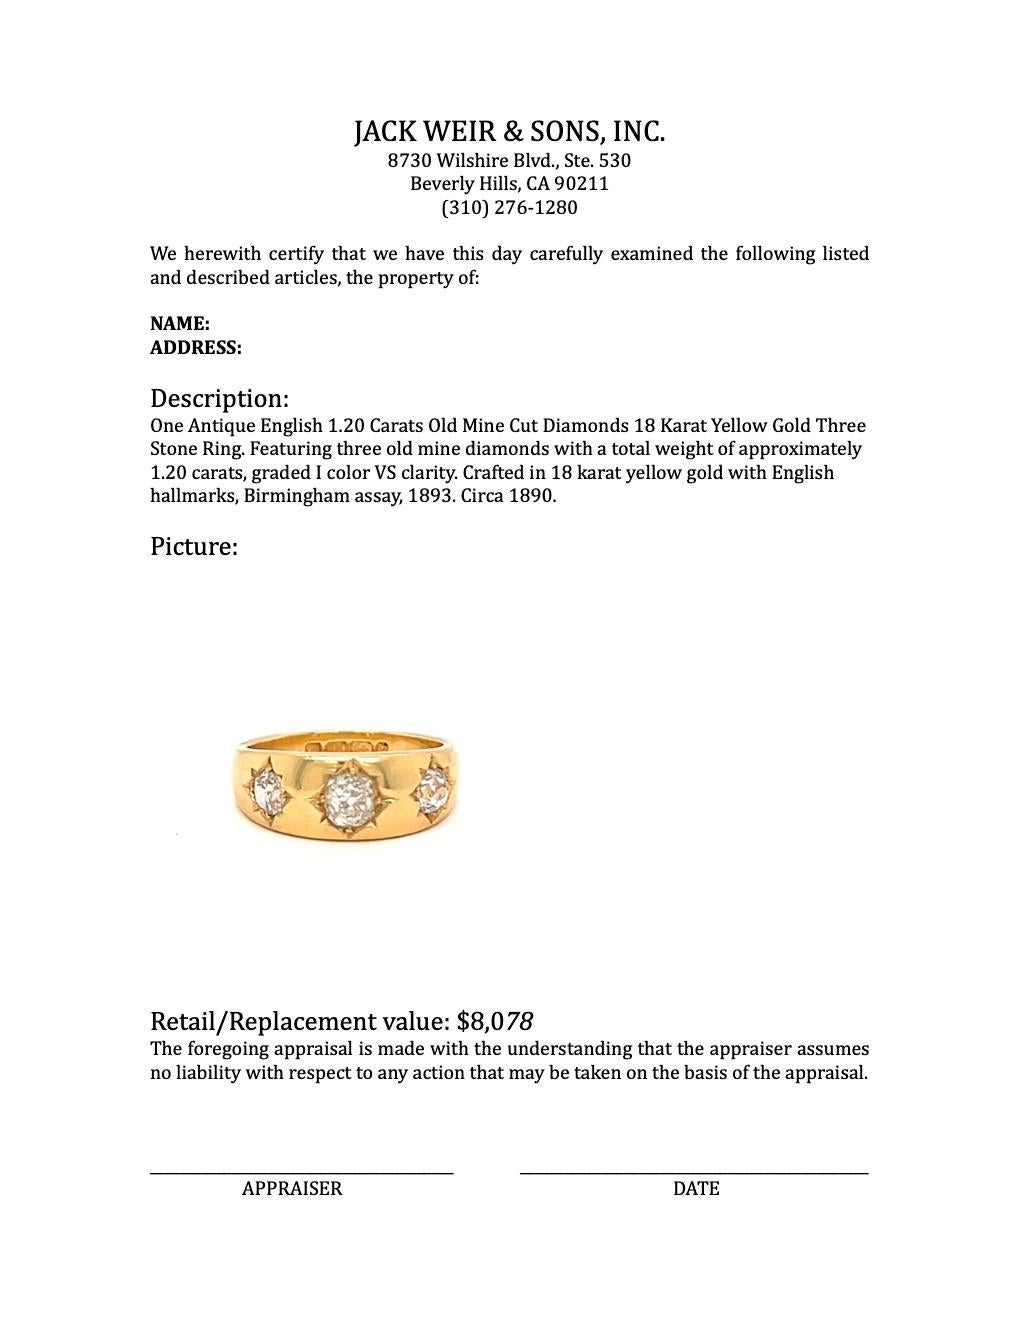 Women's or Men's Antique English 1.20 Carats Old Mine Cut Diamonds 18K Gold Three Stone Ring